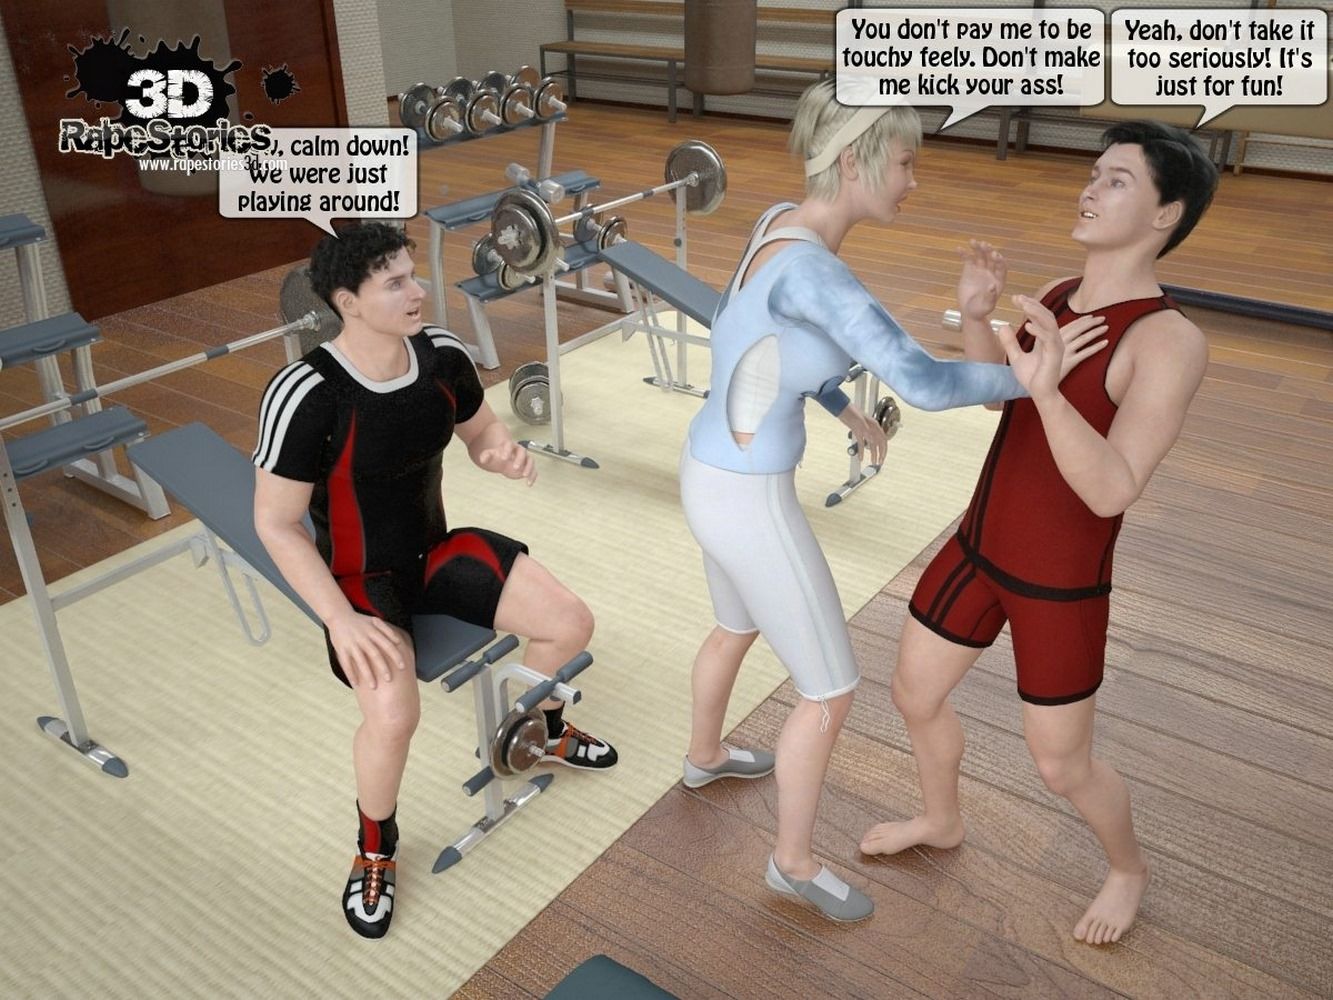 3DRapestory-2 Guys Rape chick in gym page 4